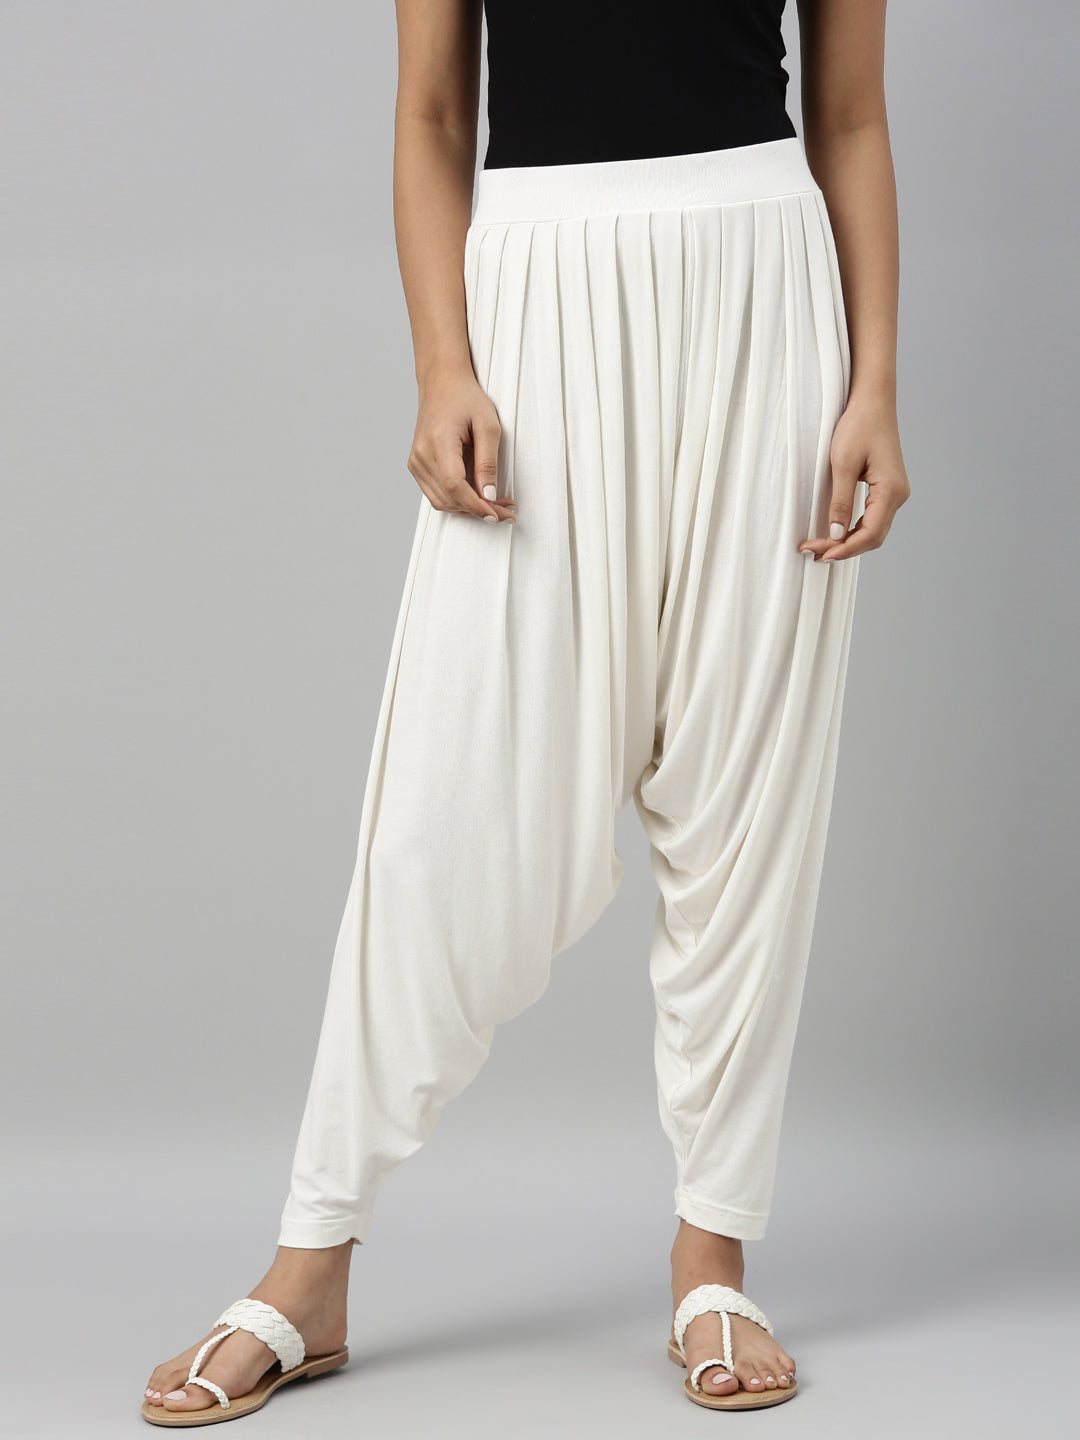 White Dhoti Pants for Women's , Trousers, Indian Dhoti Pant, Indian Enthic  Pants, Yoga Pants, Indian Vintage Pant, Cotton Dhoti Pant,t - Etsy